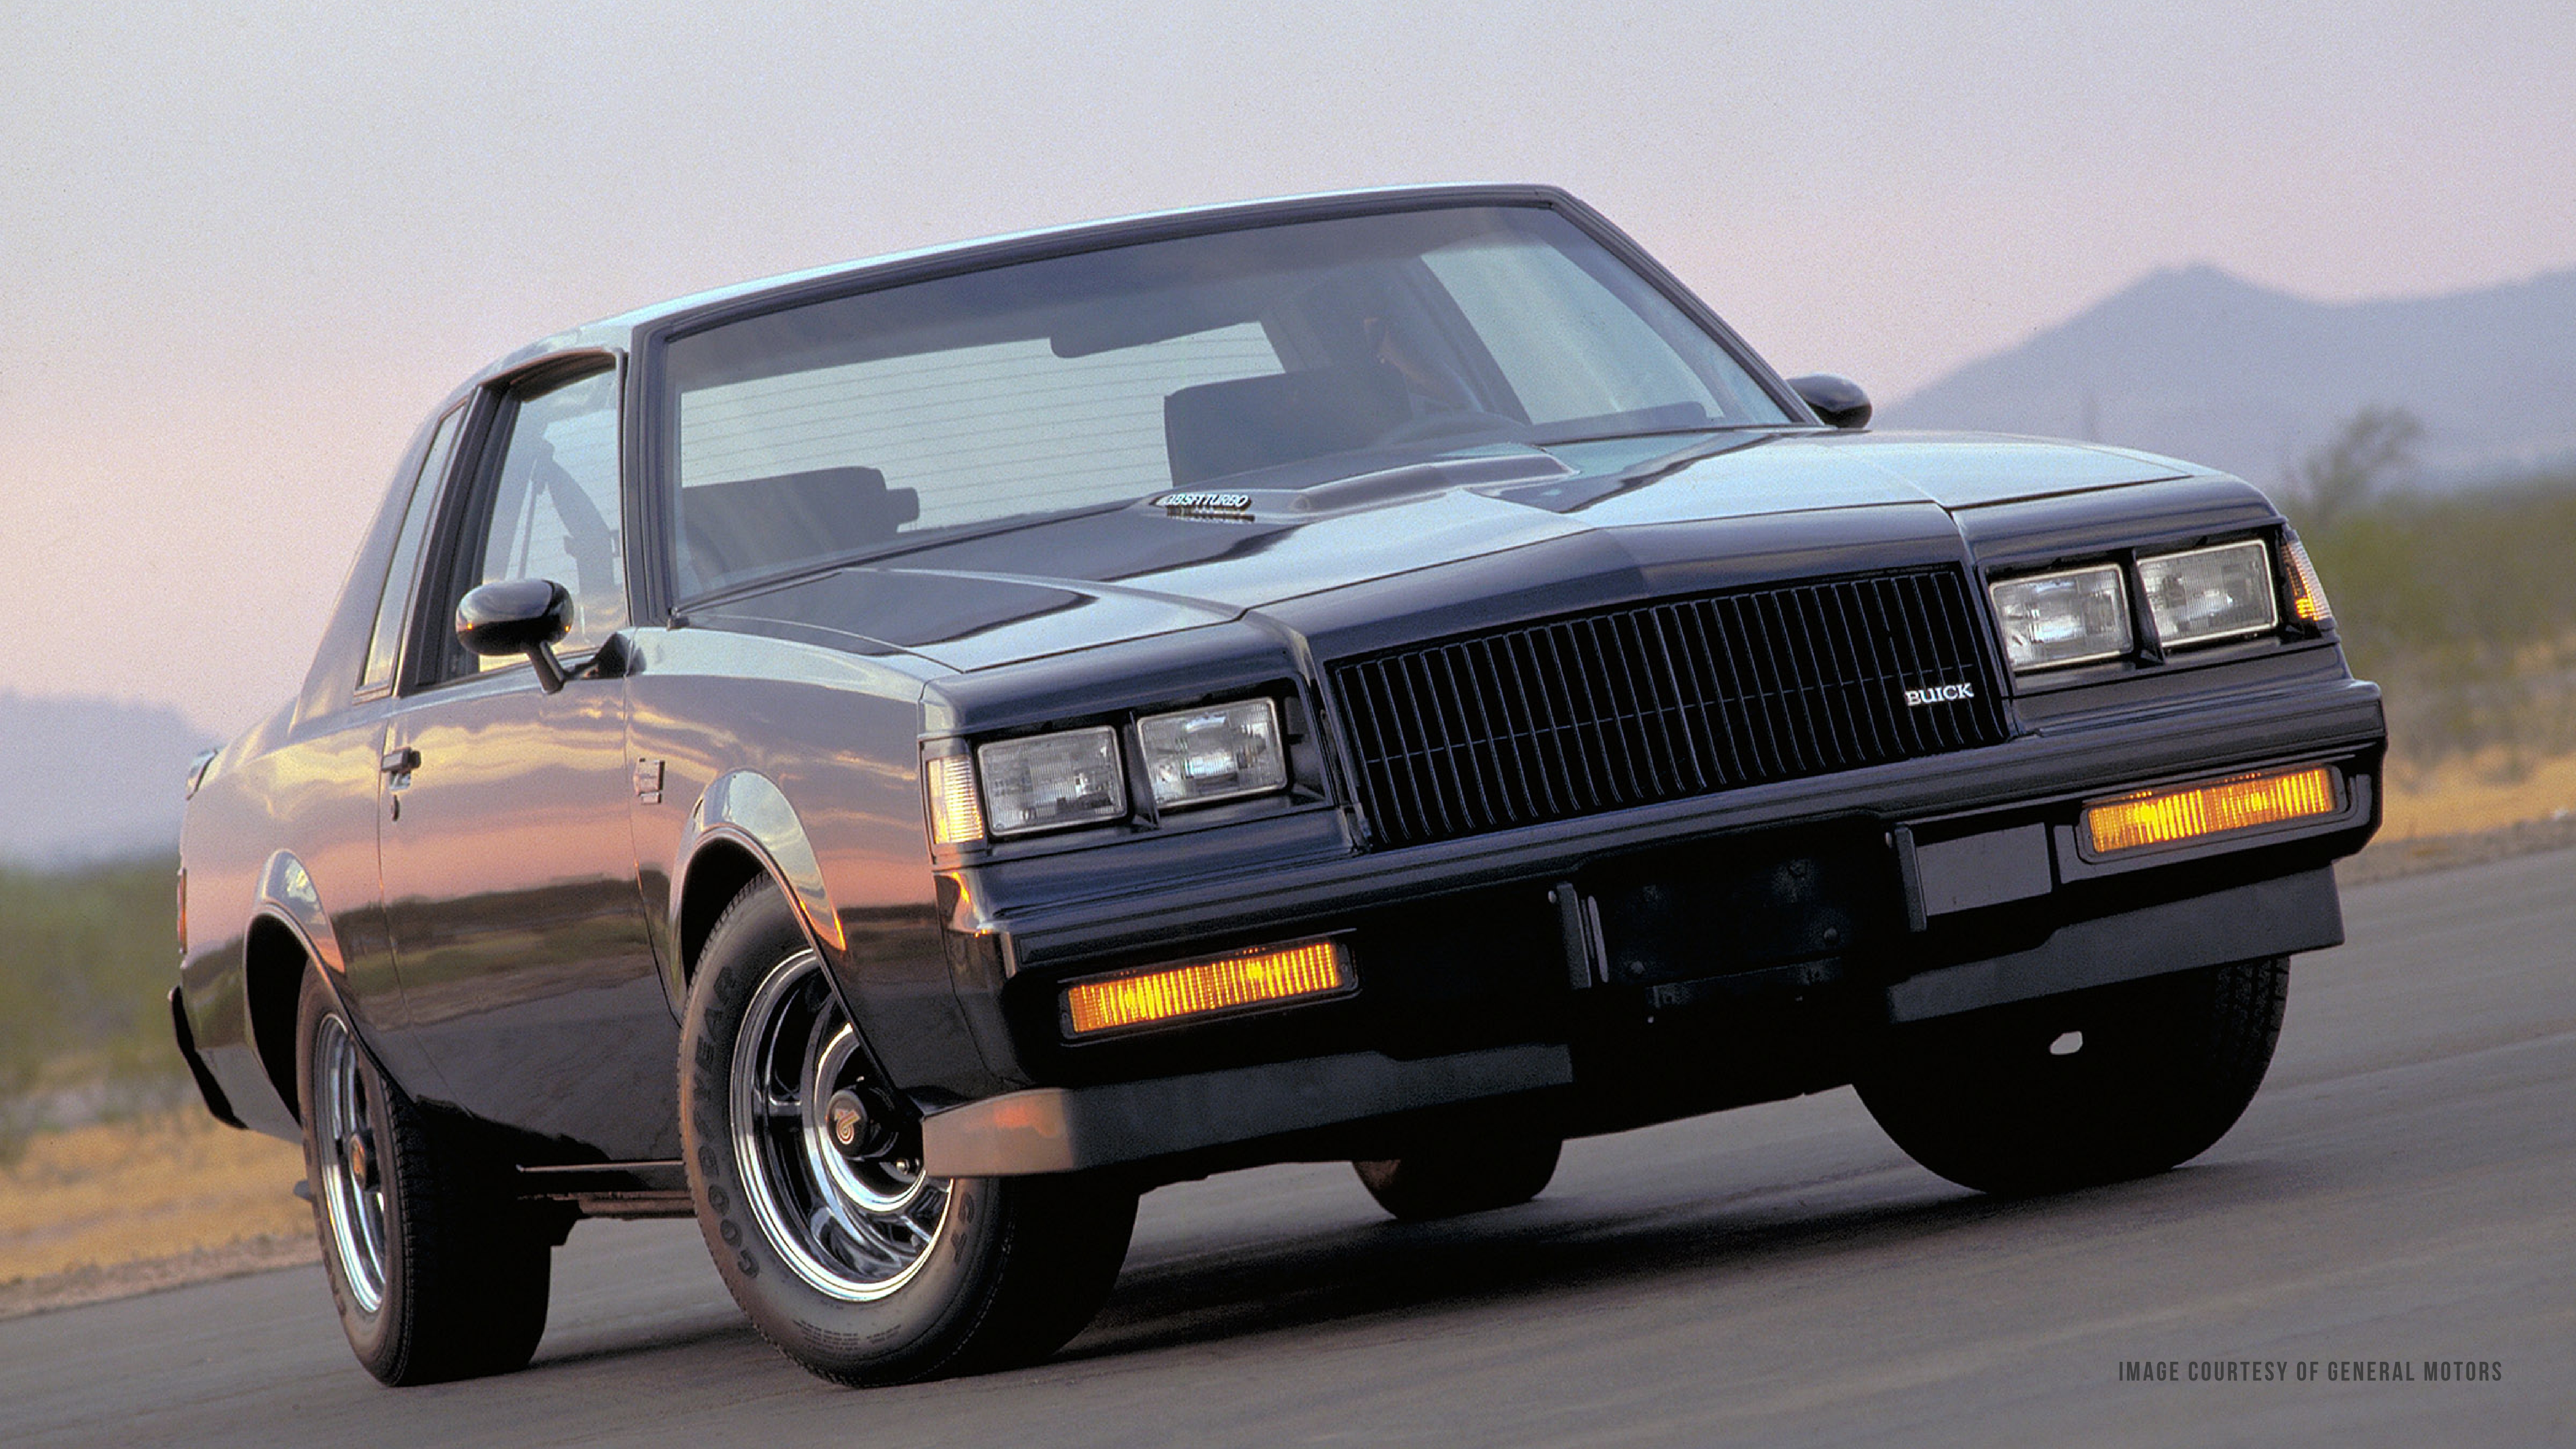 1987 Buick Regal Grand National - image courtesy of General Motors